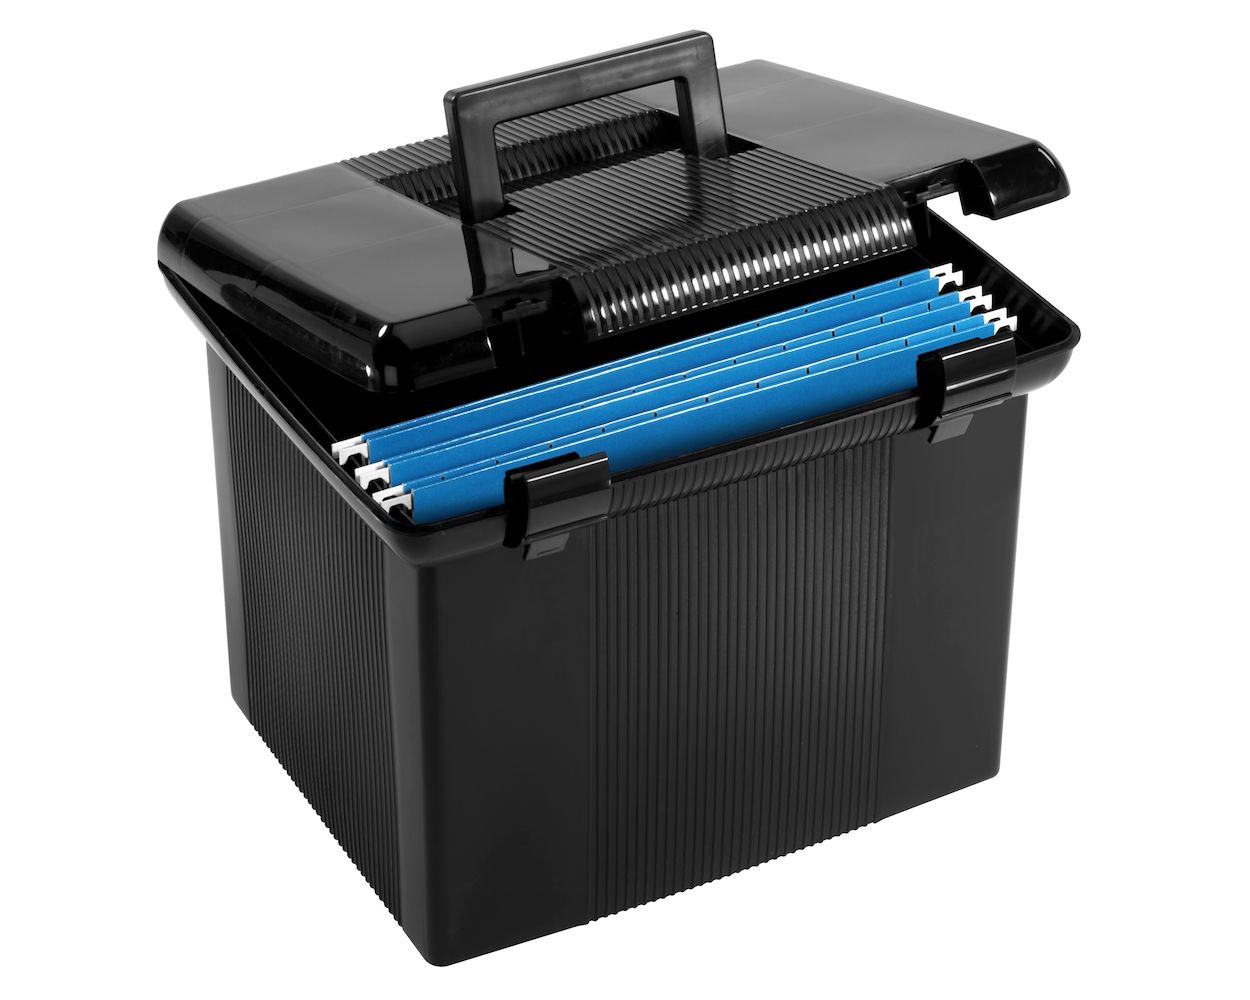 Storex Plastic File Tote Storage Box, 9-1/4 x 15-1/2 x 12-1/4, Blue/Clear